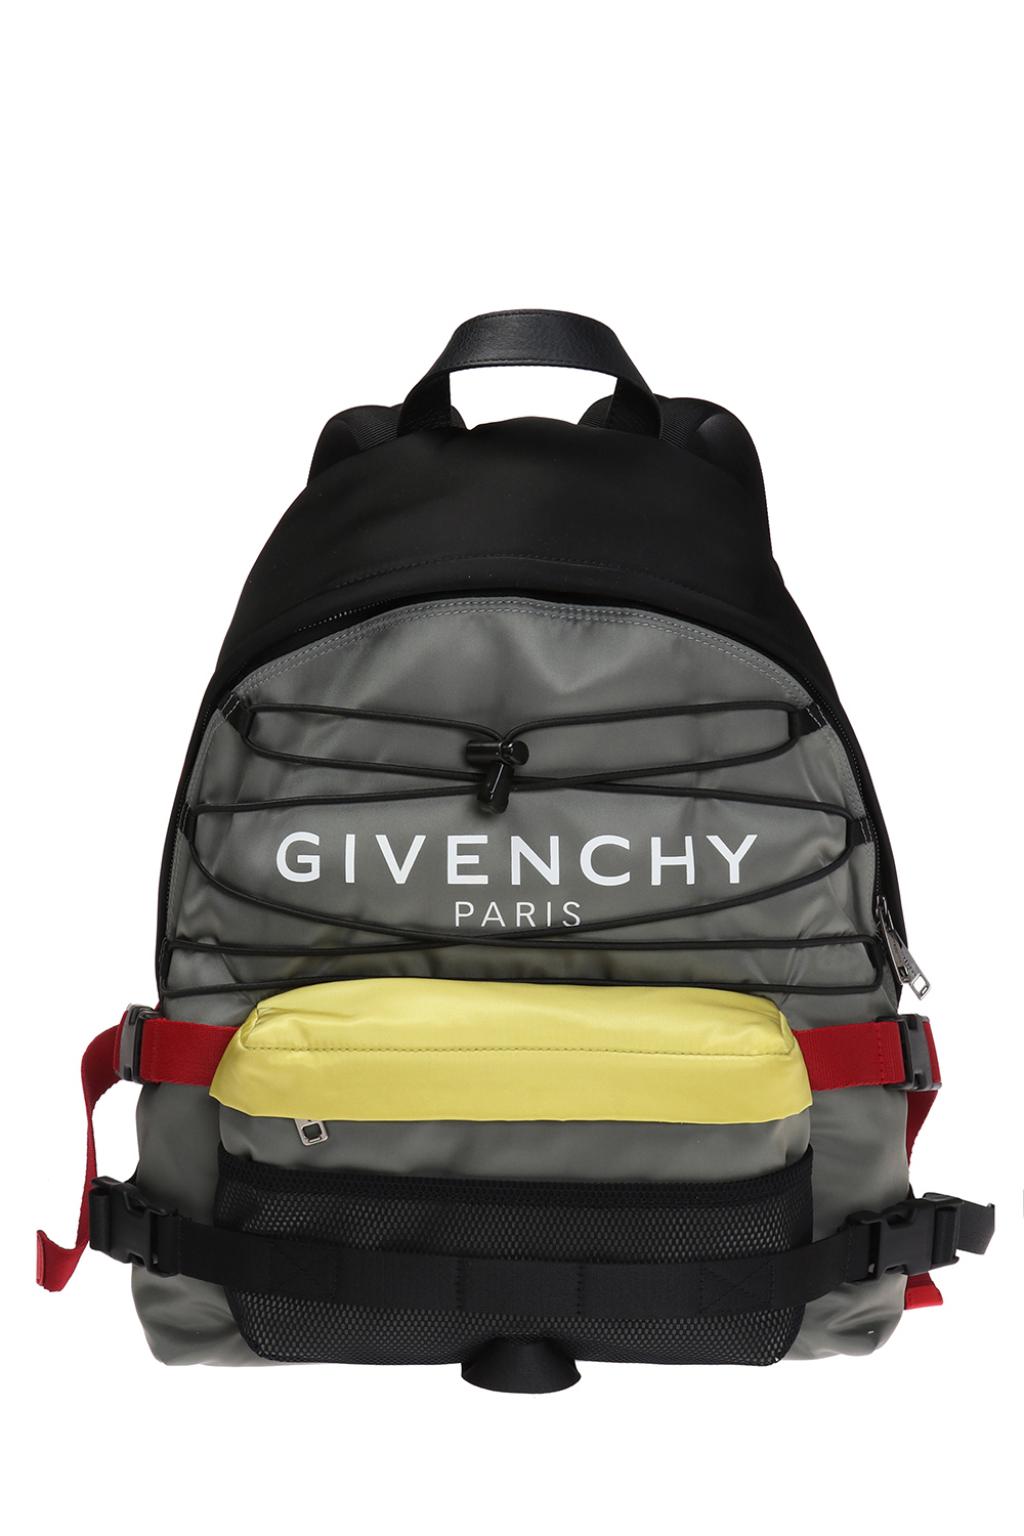 Givenchy 'Urban' backpack | Men's Bags | Vitkac